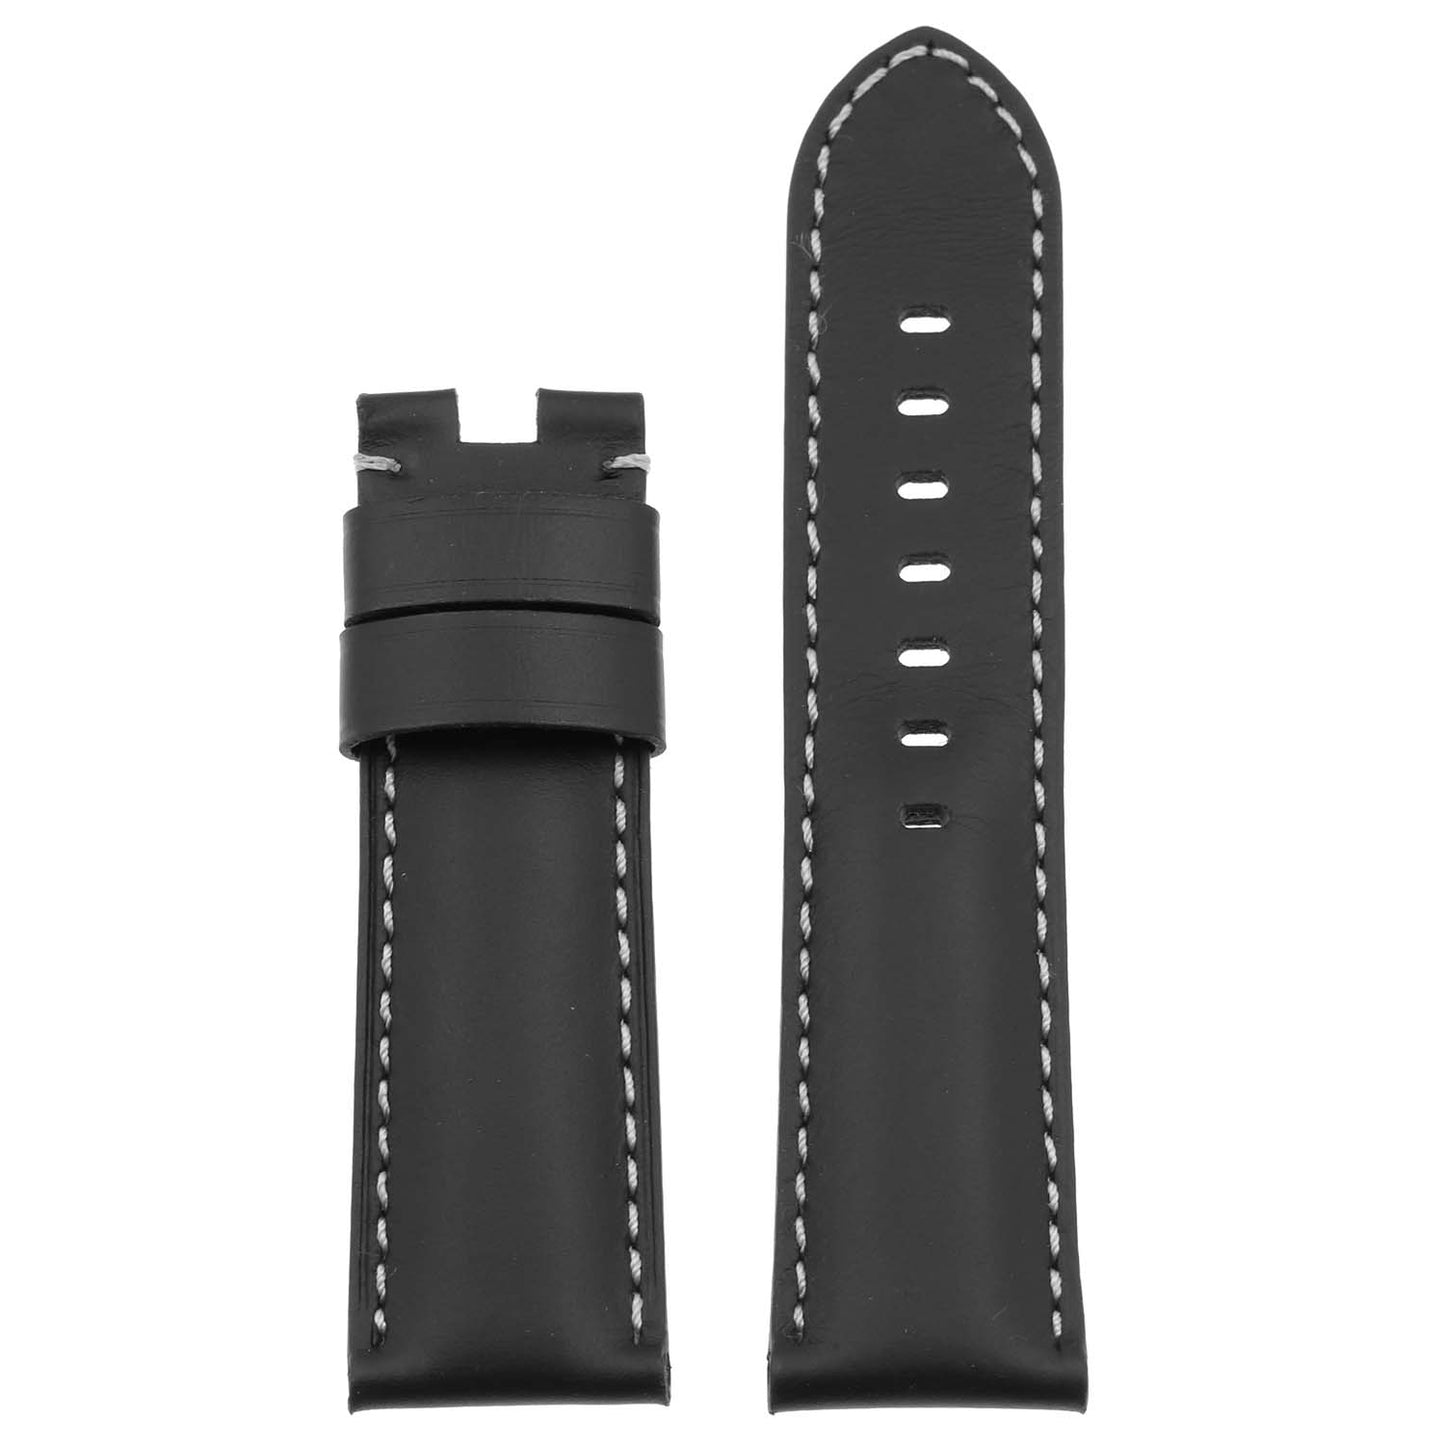 DASSARI Smooth Leather Strap for Samsung Gear S3 Classic